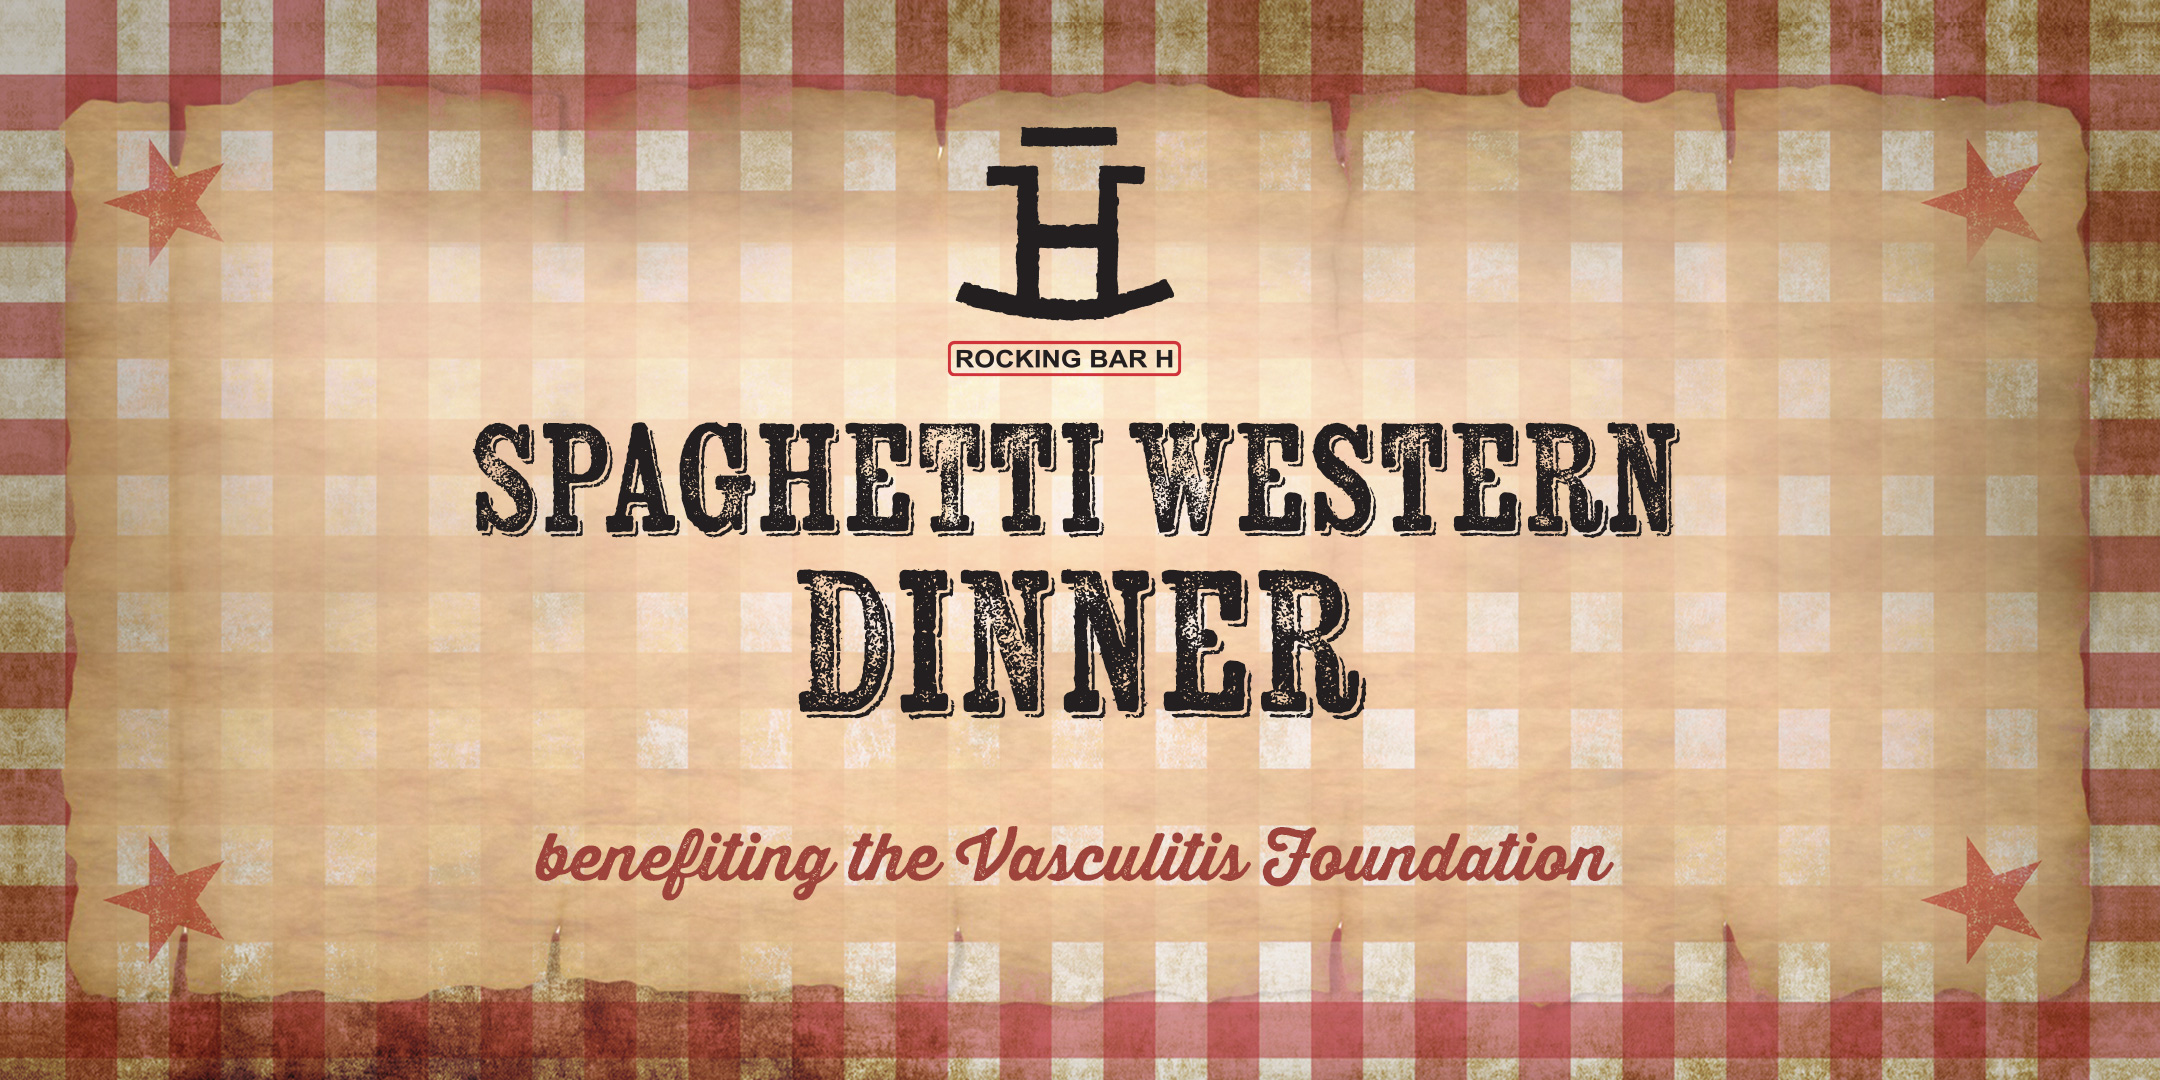 Rocking Bar H Spaghetti Western Dinner - benefitting the Vasculitis Foundation